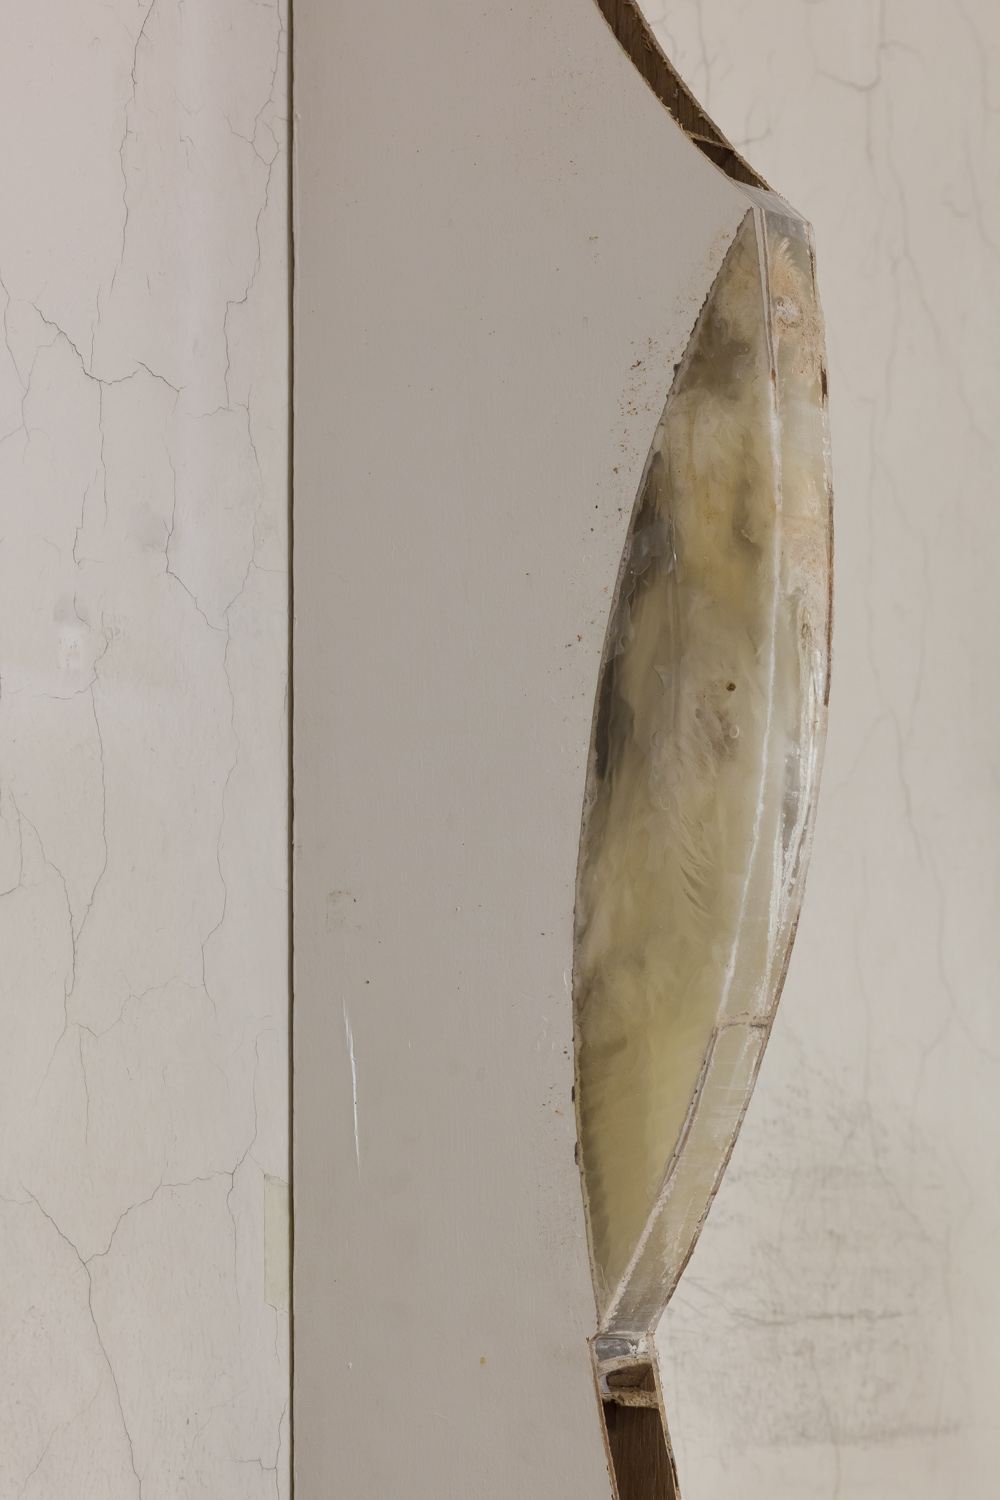 Michael E. SmithUntitled, 2019Door, pigeon, plastic 191.8 x 5.7 x 25.4 cm